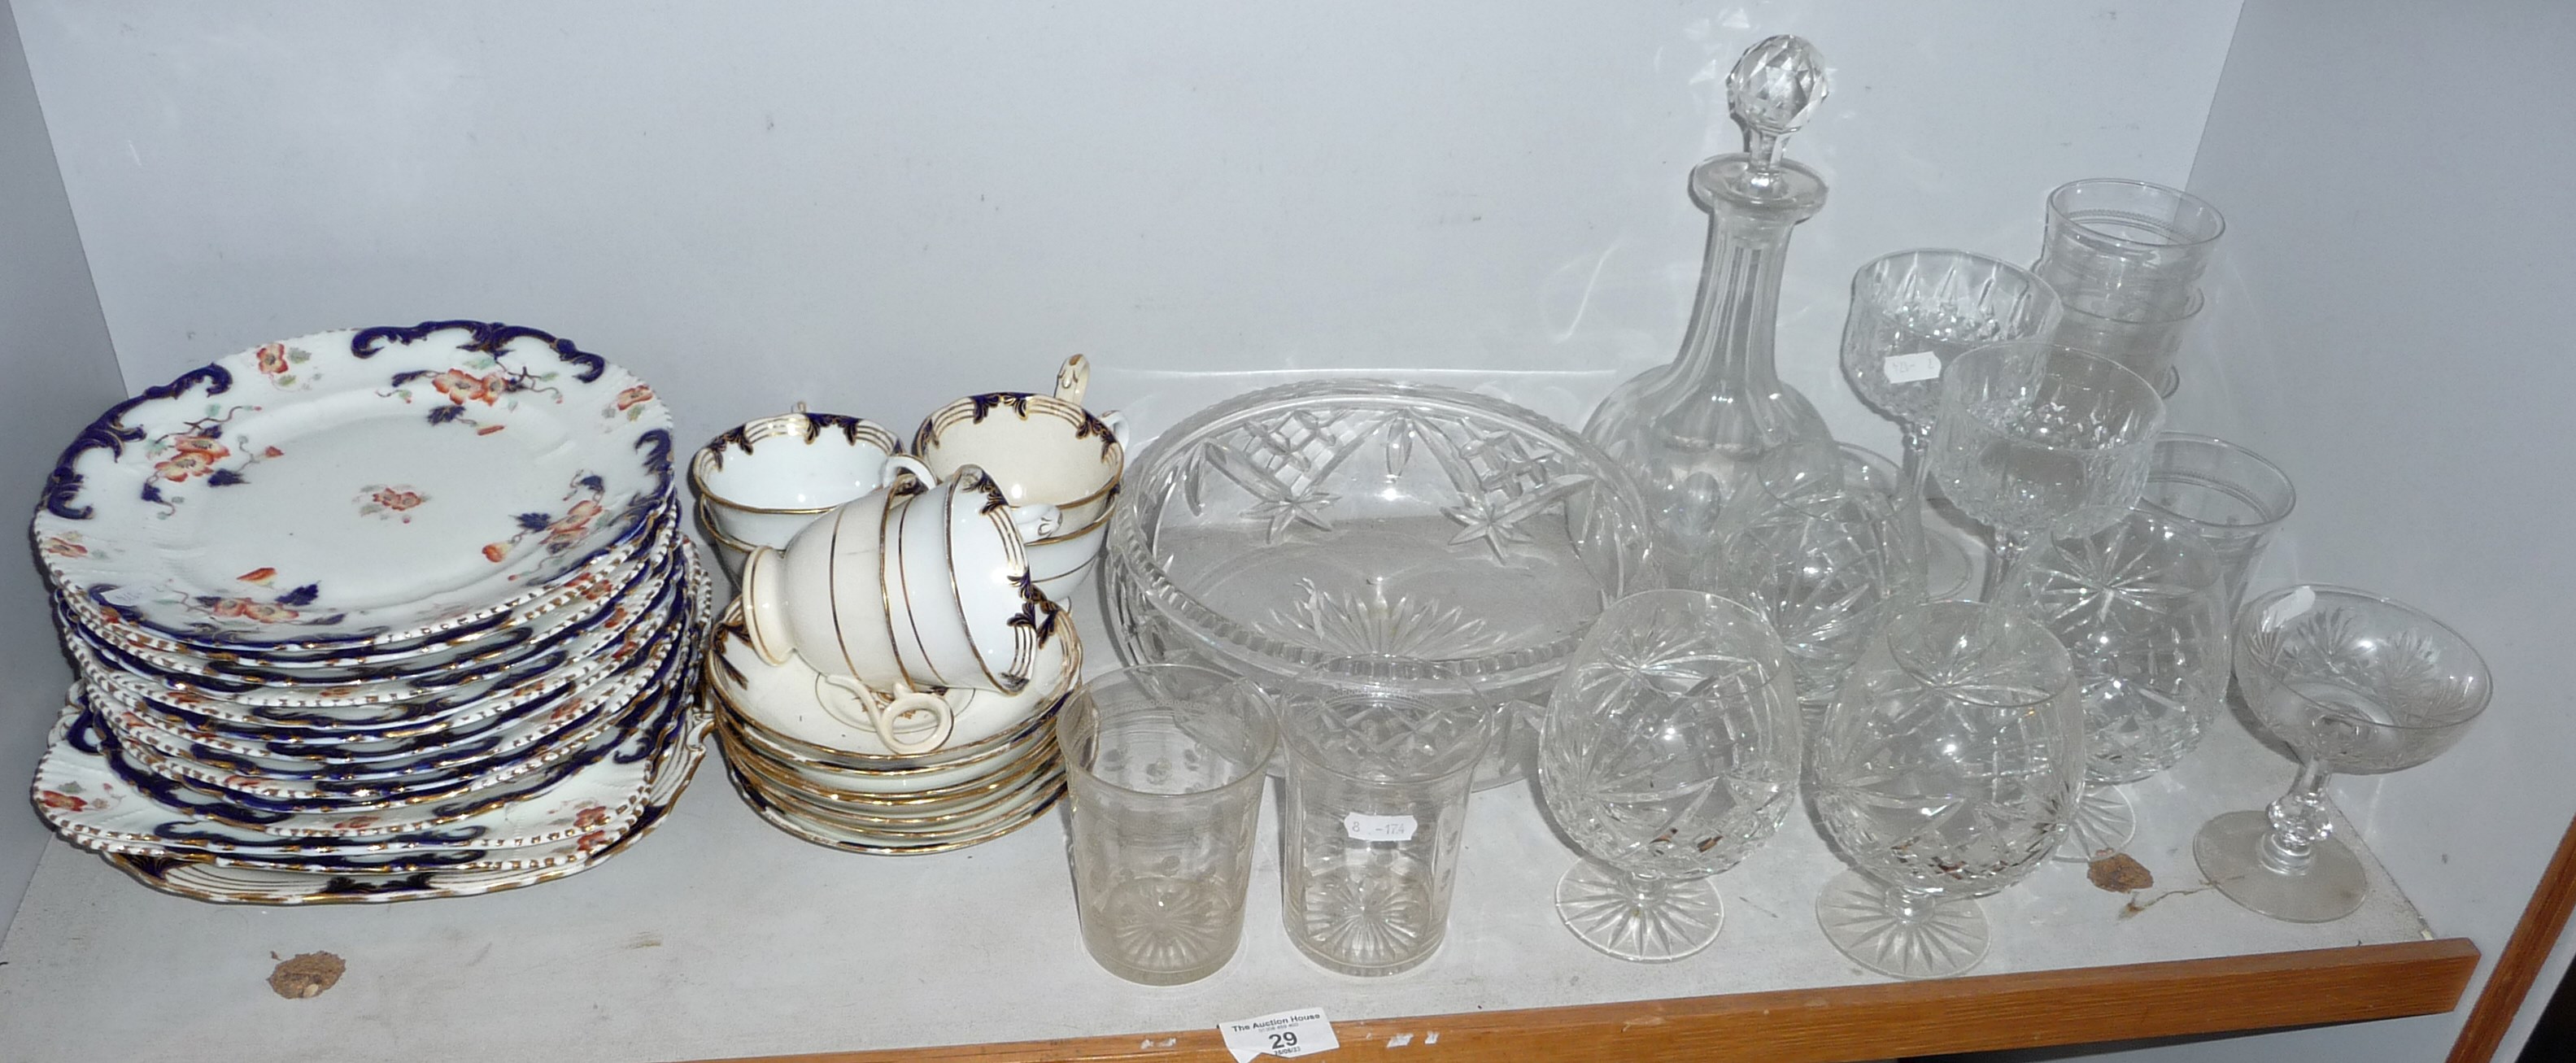 Edwardian china plates and glassware